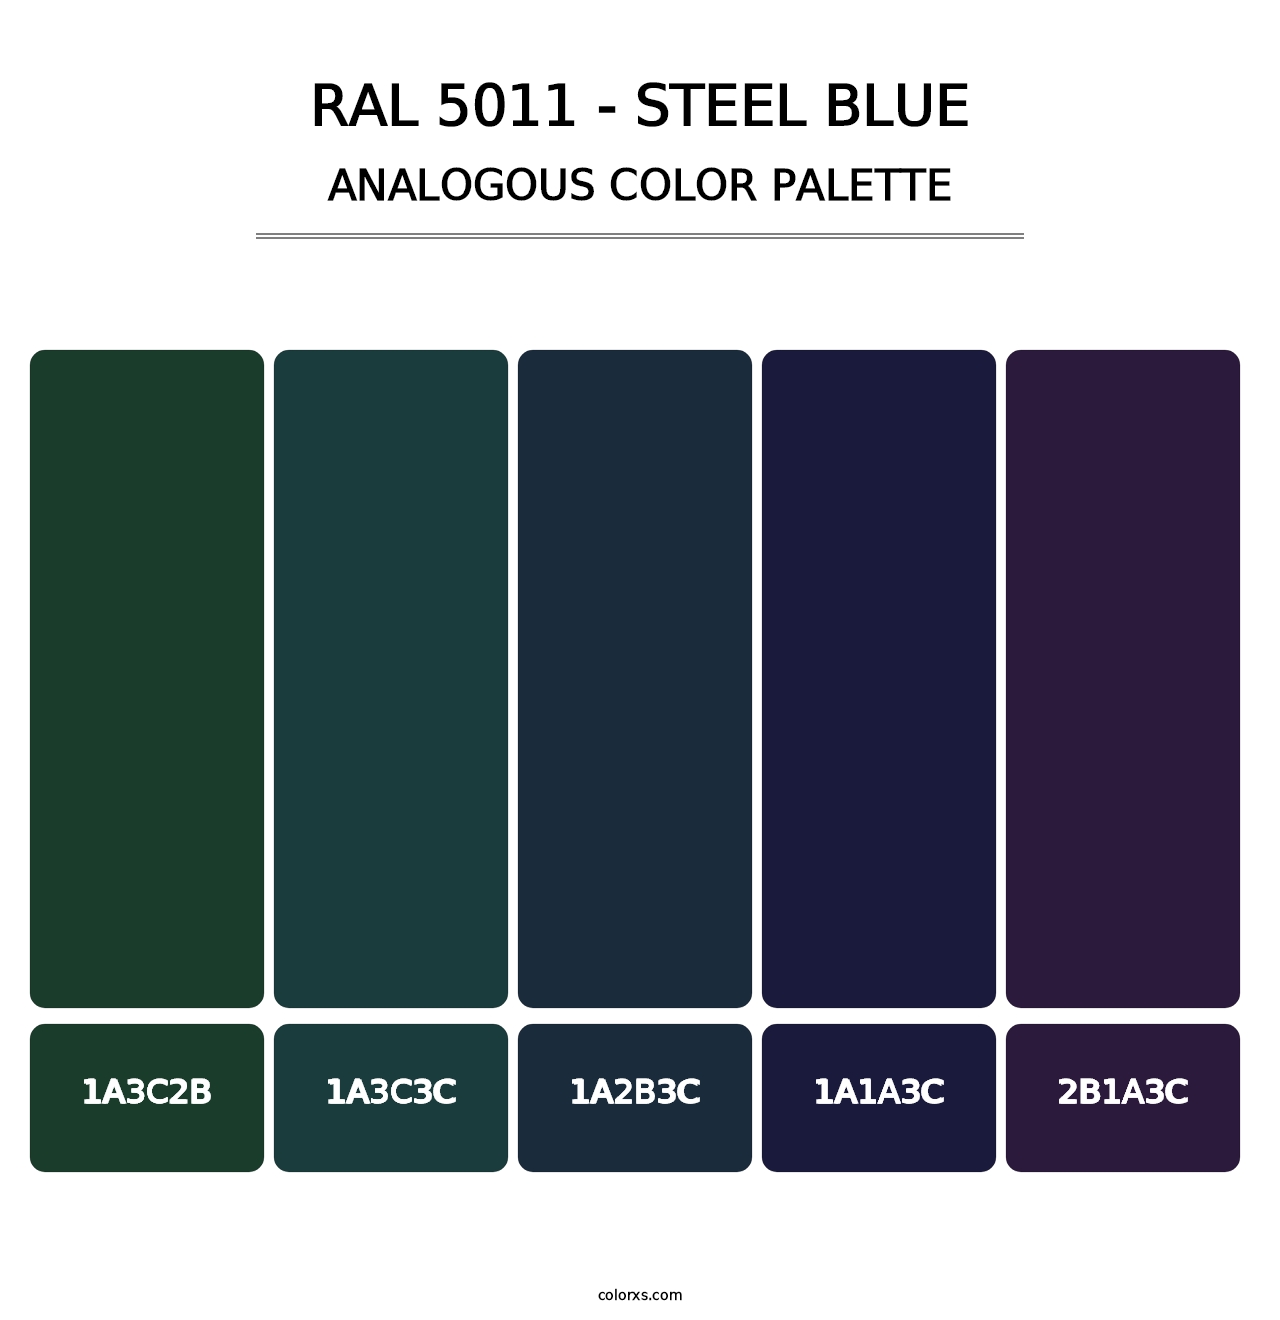 RAL 5011 - Steel Blue - Analogous Color Palette